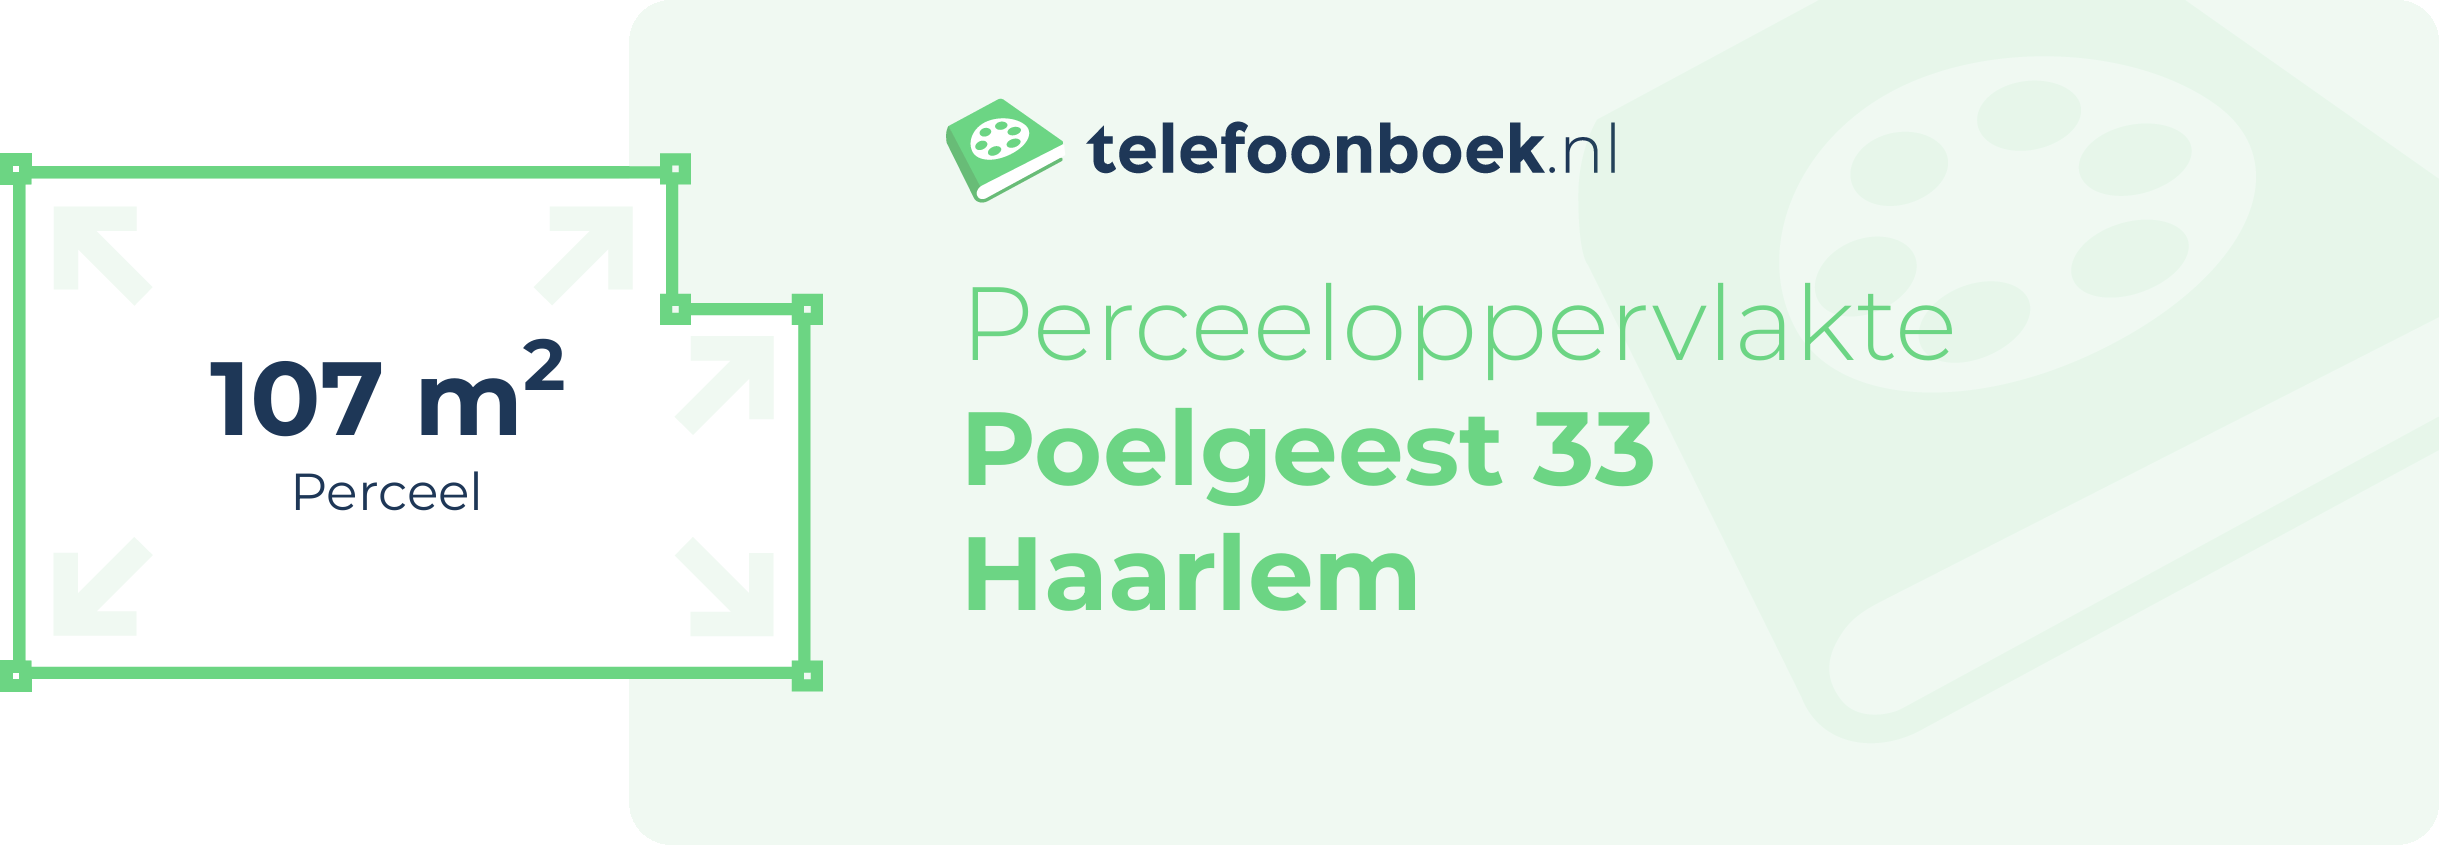 Perceeloppervlakte Poelgeest 33 Haarlem